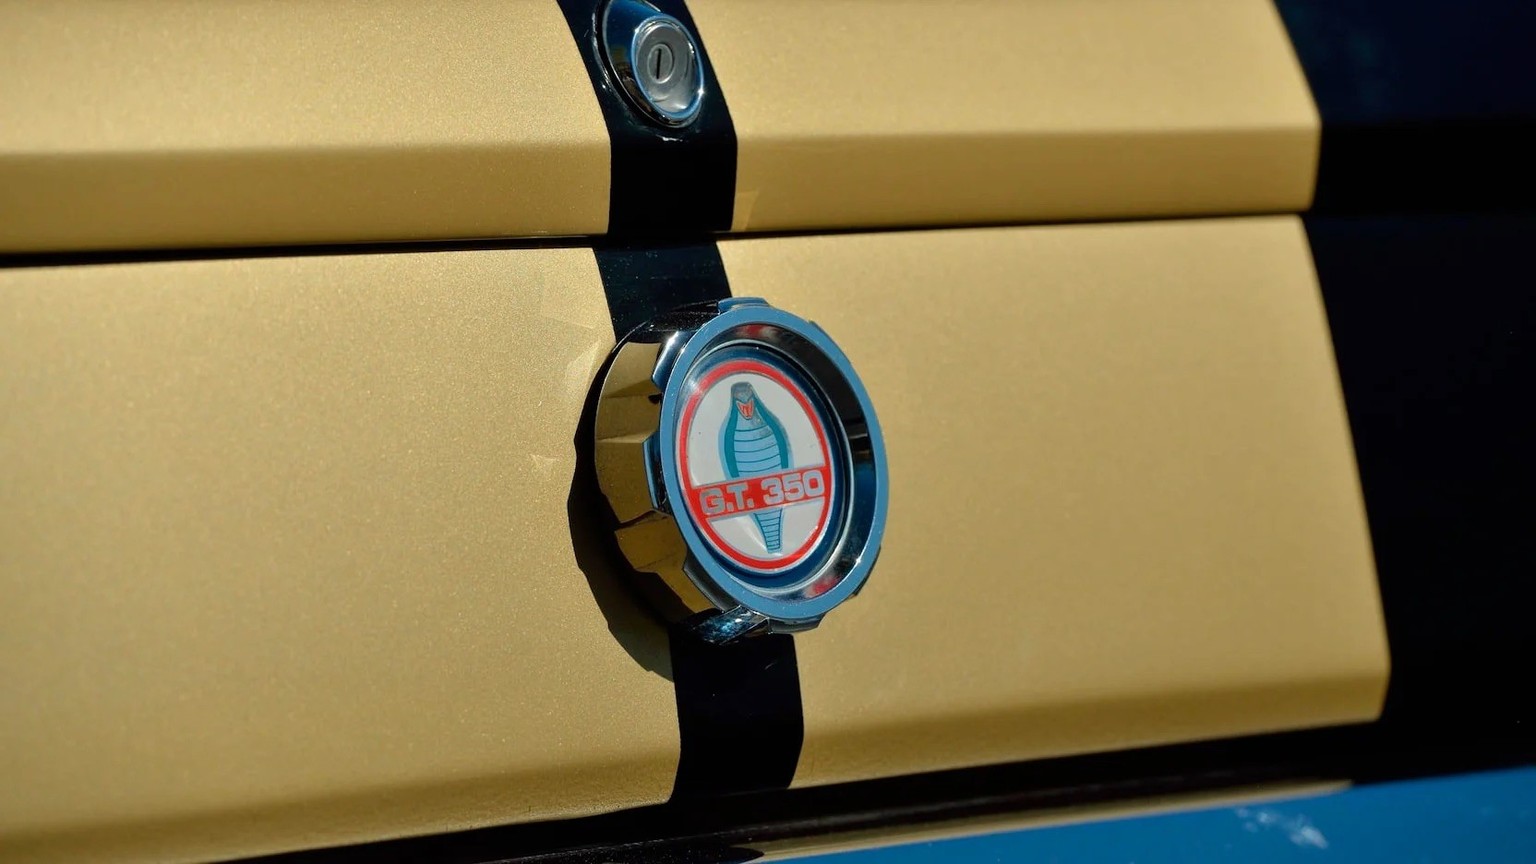 Shelby Mustang GT350H hertz mietauto 1966 auktion auto retro design https://www.mecum.com/